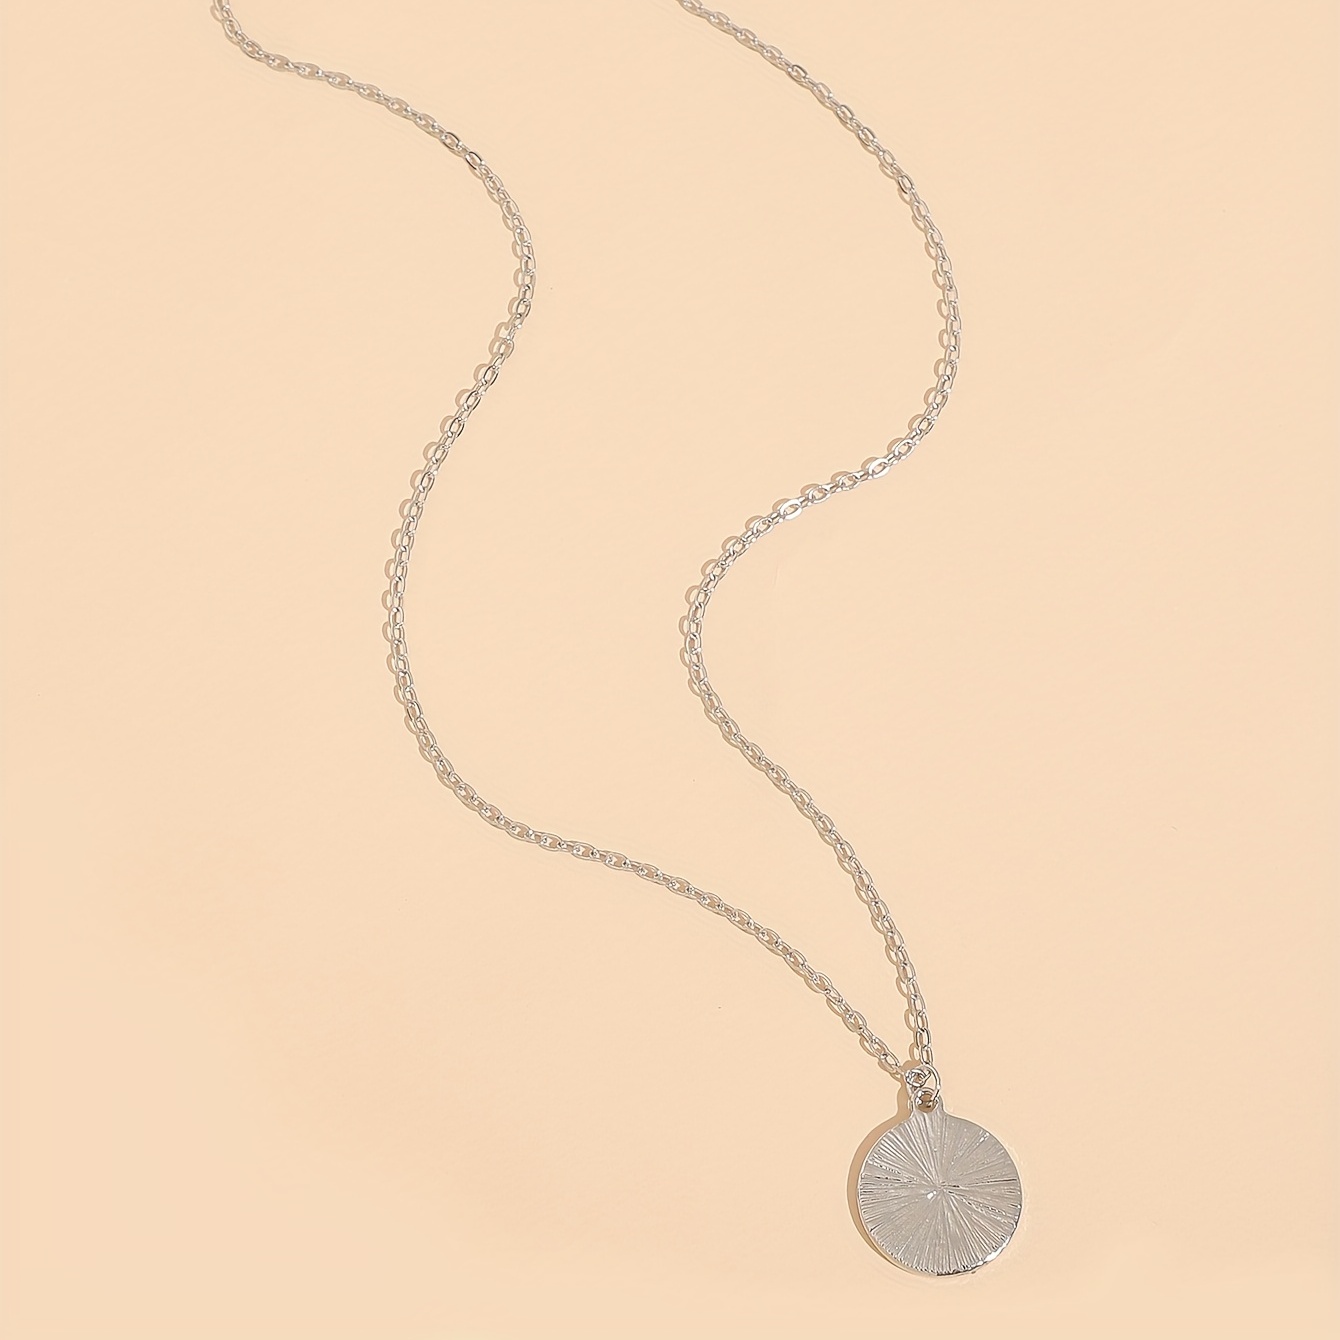 Anthropologie Silver Monogram Chain Necklace